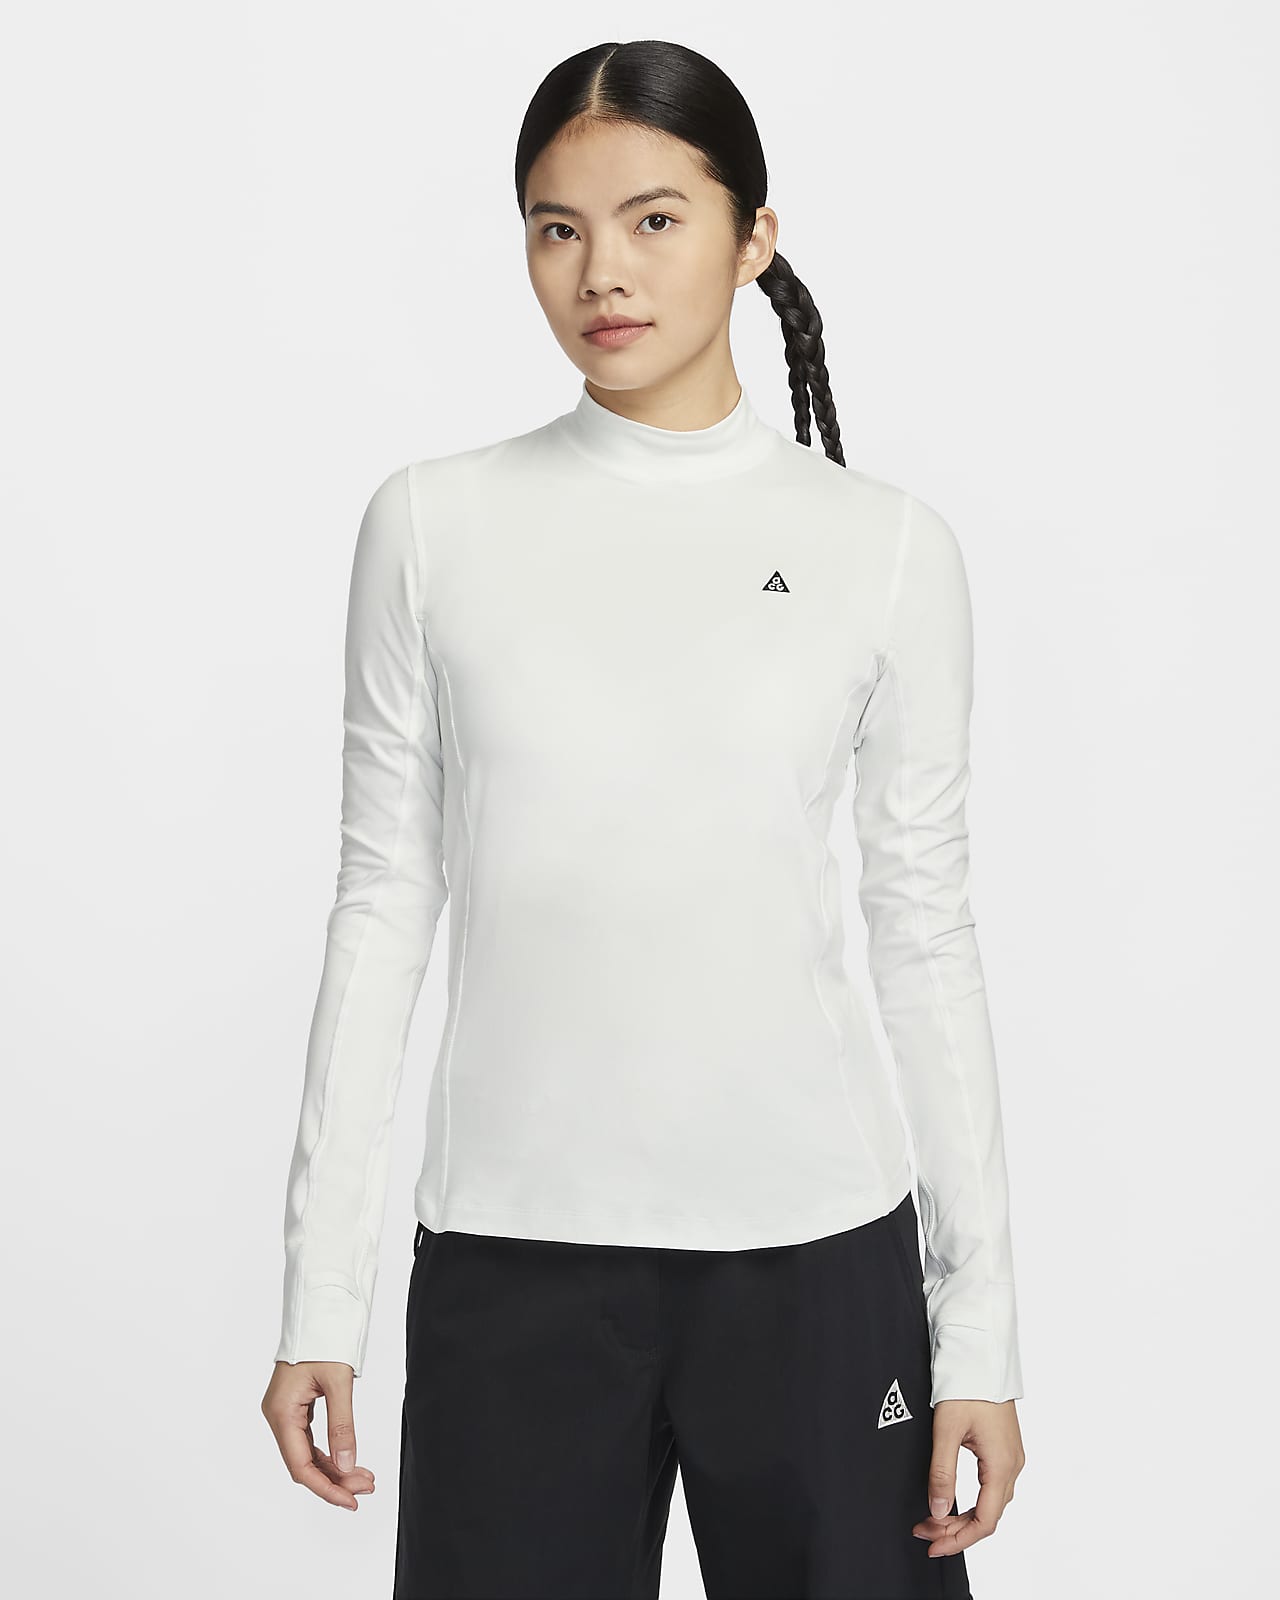 Nike ACG 'Goat Rocks' Women's Dri-FIT ADV Long-Sleeve Top